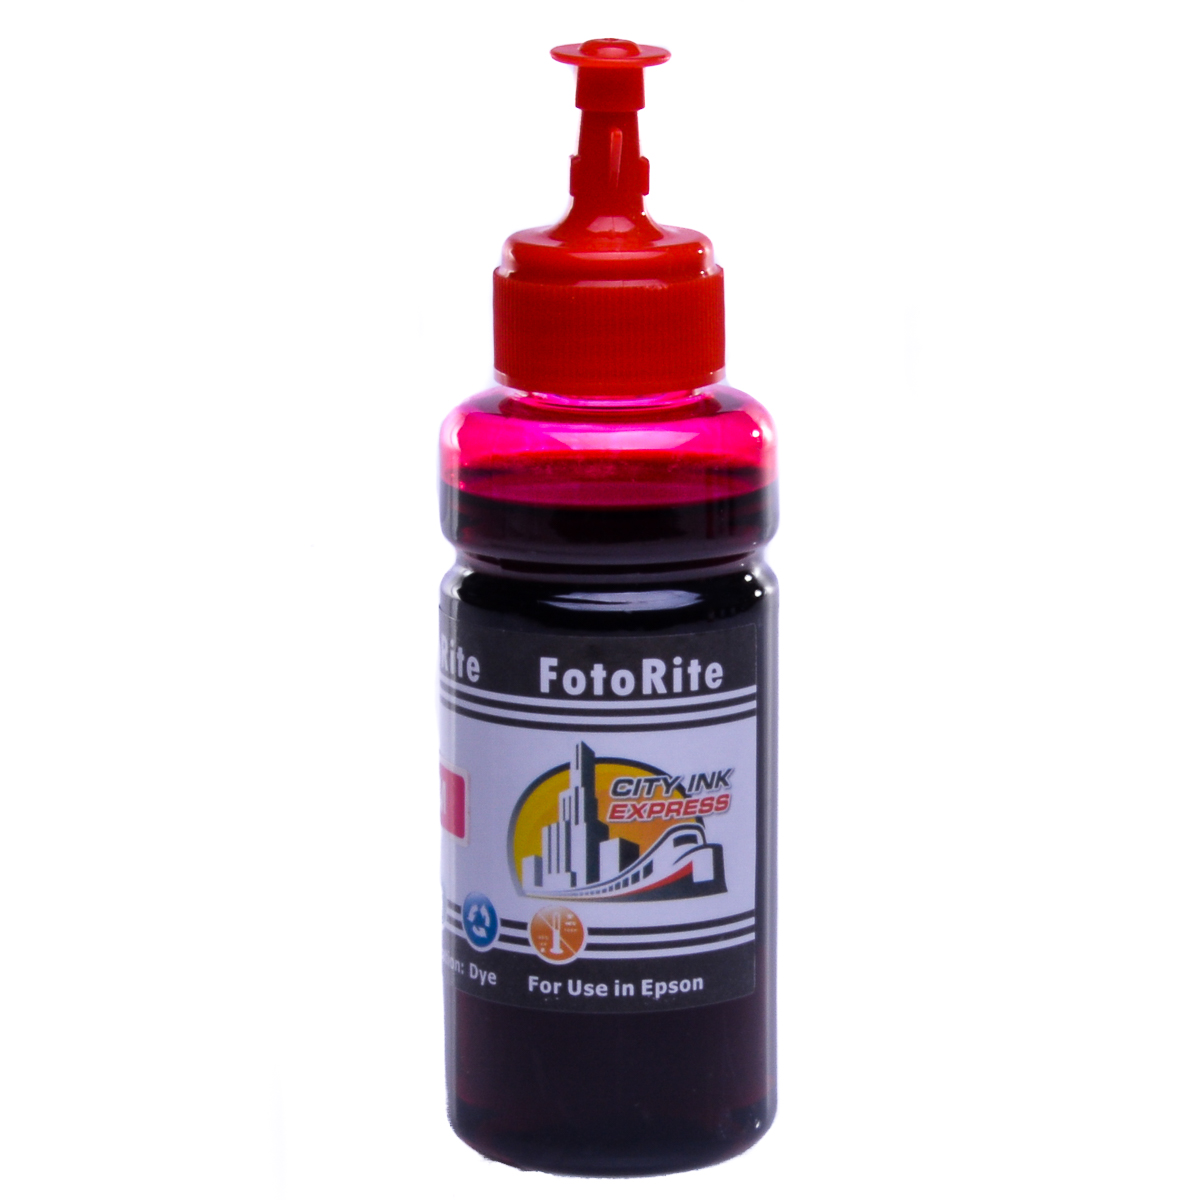 Cheap Magenta dye ink replaces Epson Stylus BX3450 - T0713